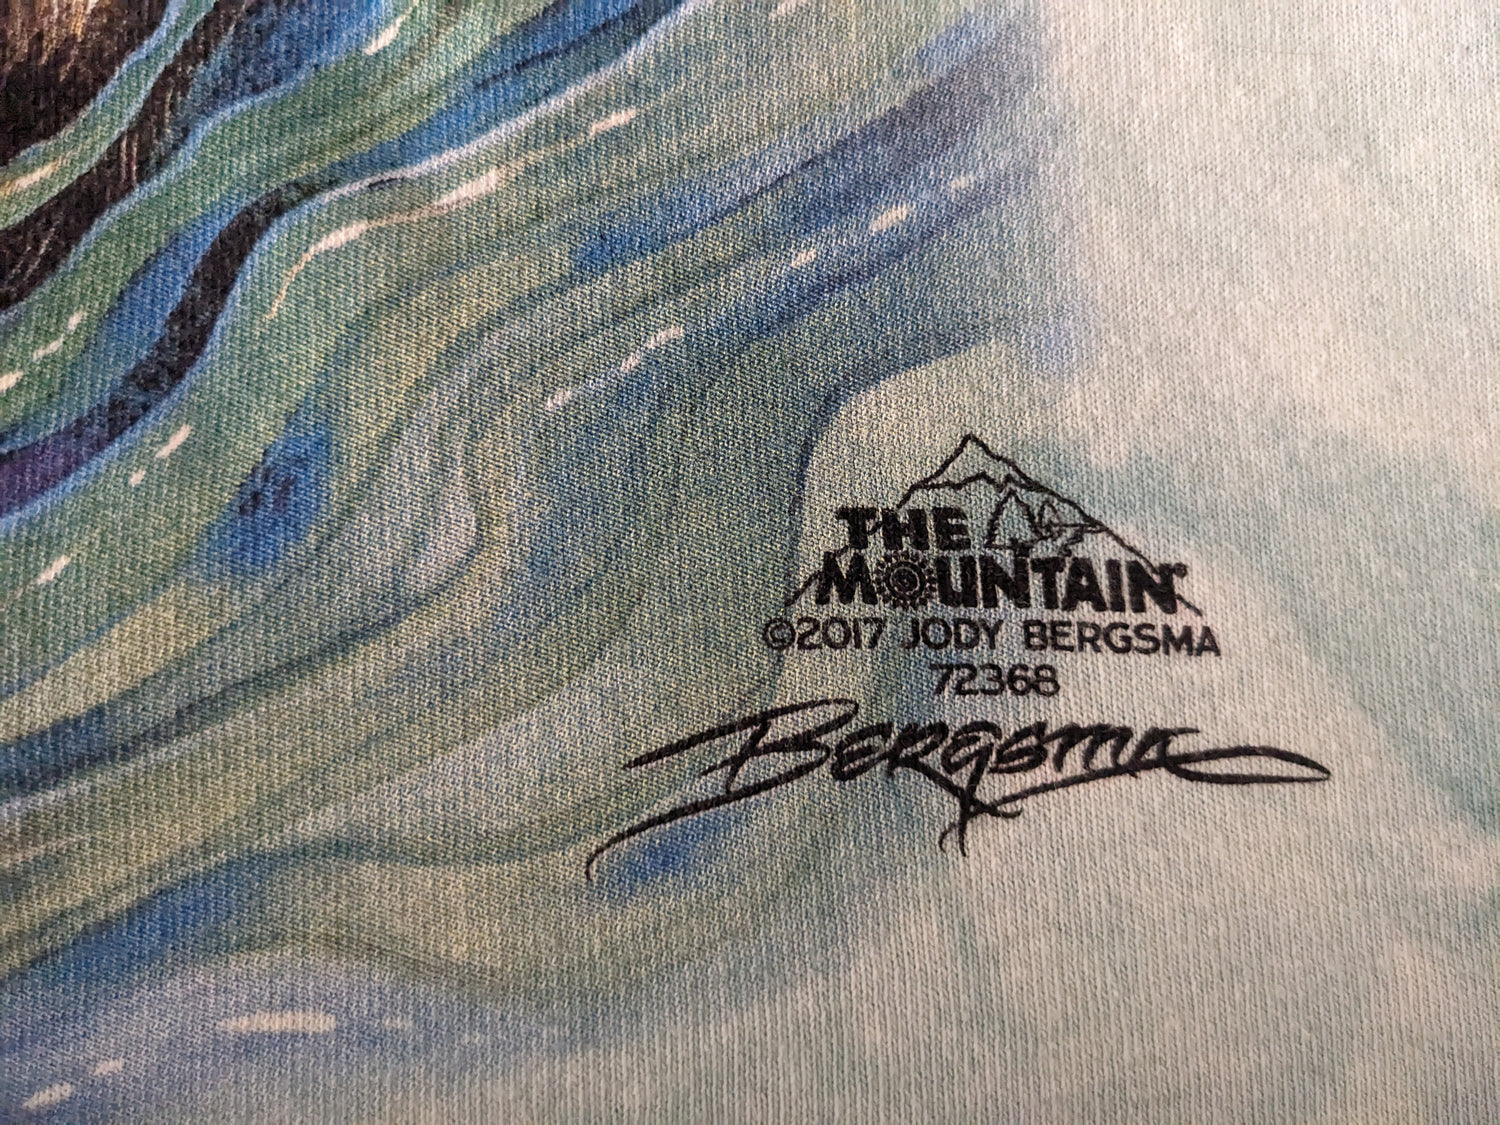 Otters on Mountain kids shirt artist signature